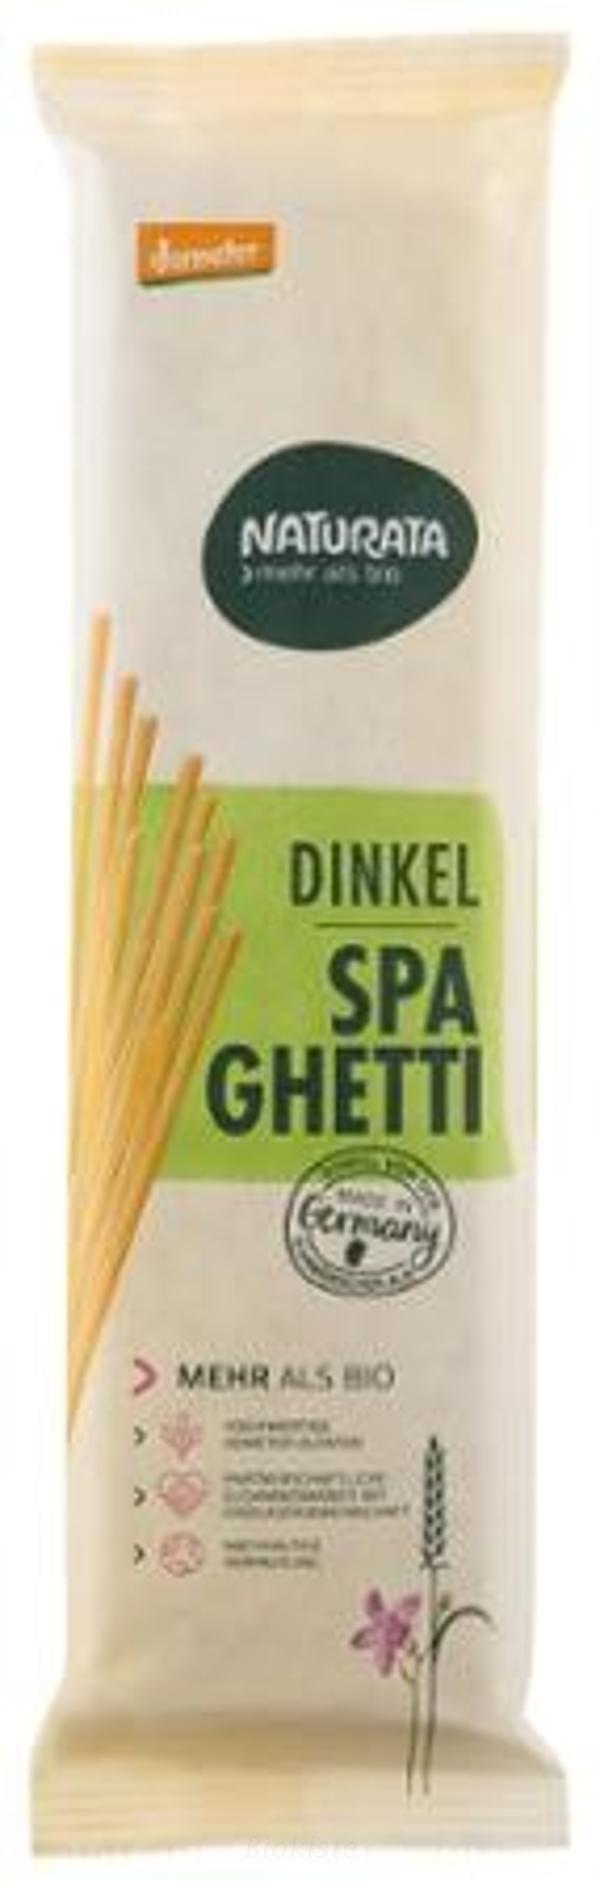 Produktfoto zu Spaghetti Dinkel, hell 500 g